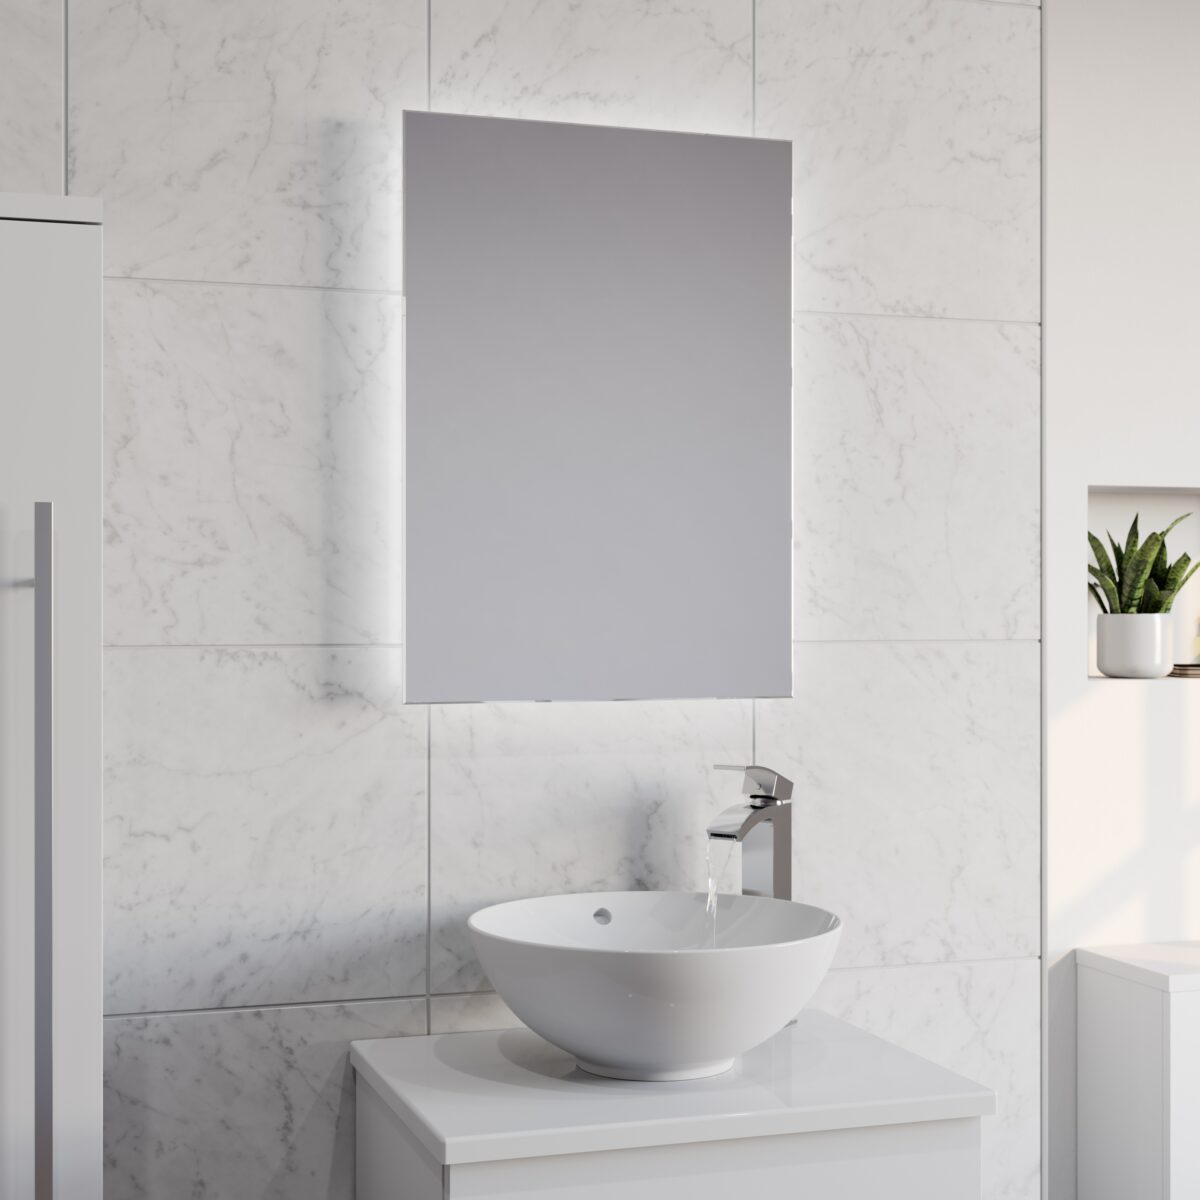 K-Vit Mirrors - Como LED Illuminated Bathroom Mirror - MIR007